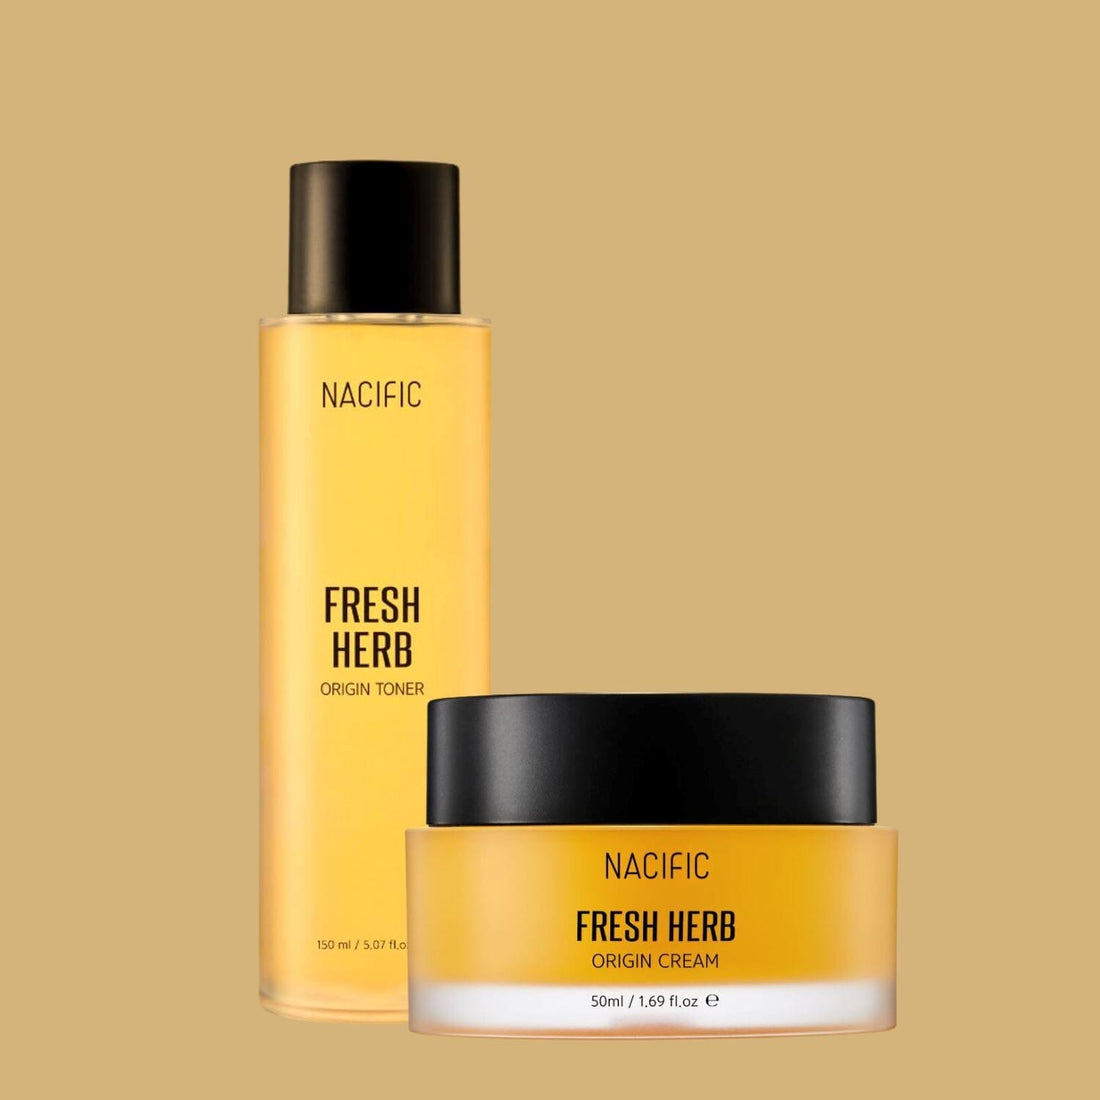 Nacific Fresh Herb Origin Line Toner + Cream, at Orion Beauty. Nacific Official Sole Authorized Retailer in Sri Lanka!